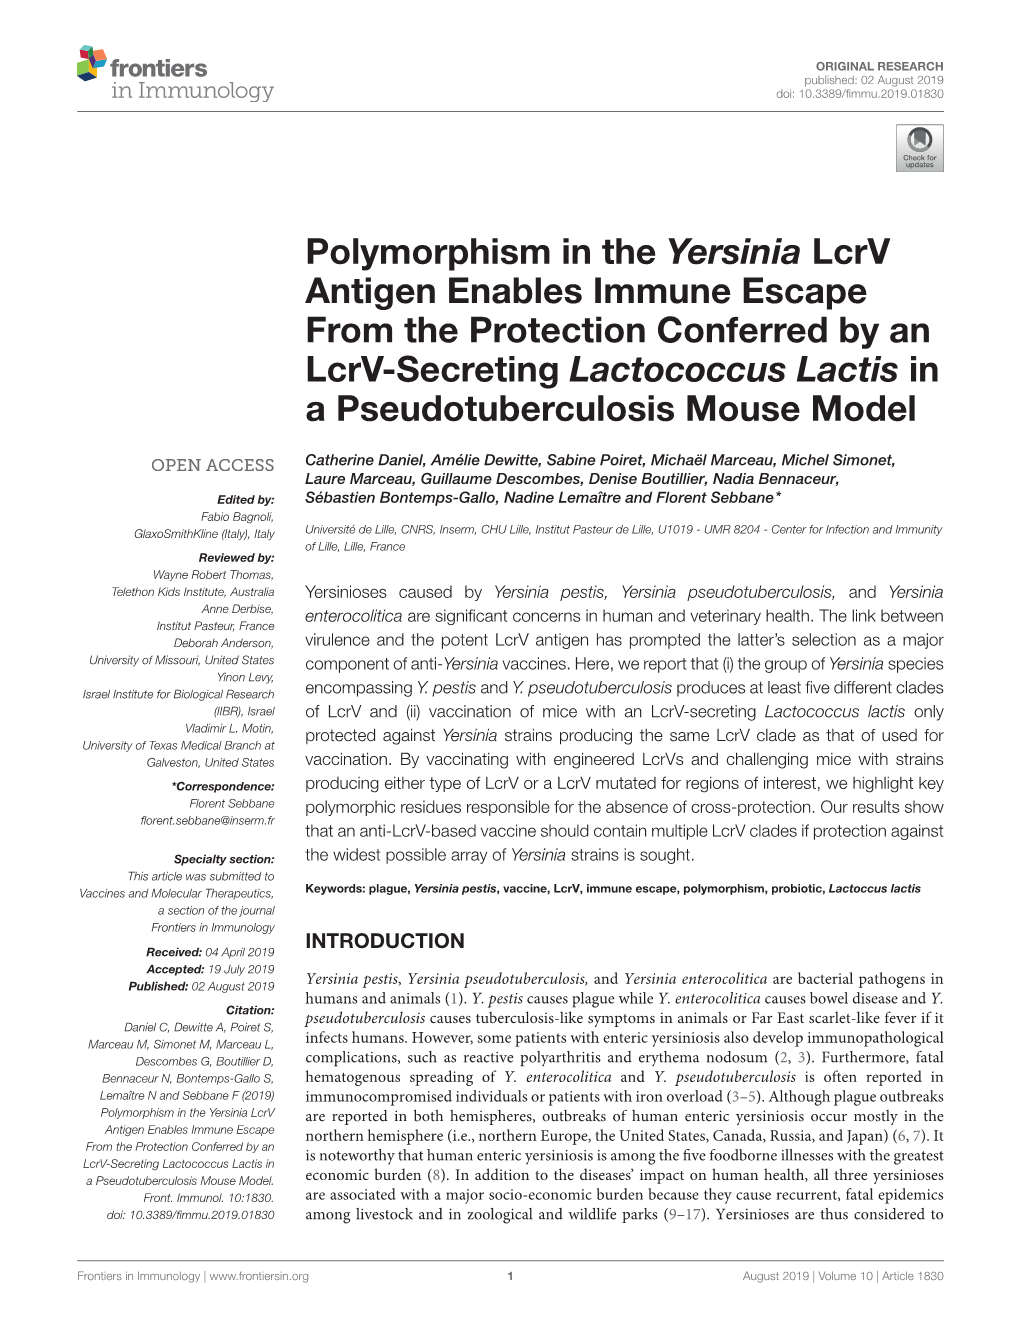 Polymorphism in the Yersinia Lcrv Antigen Enables Immune Escape